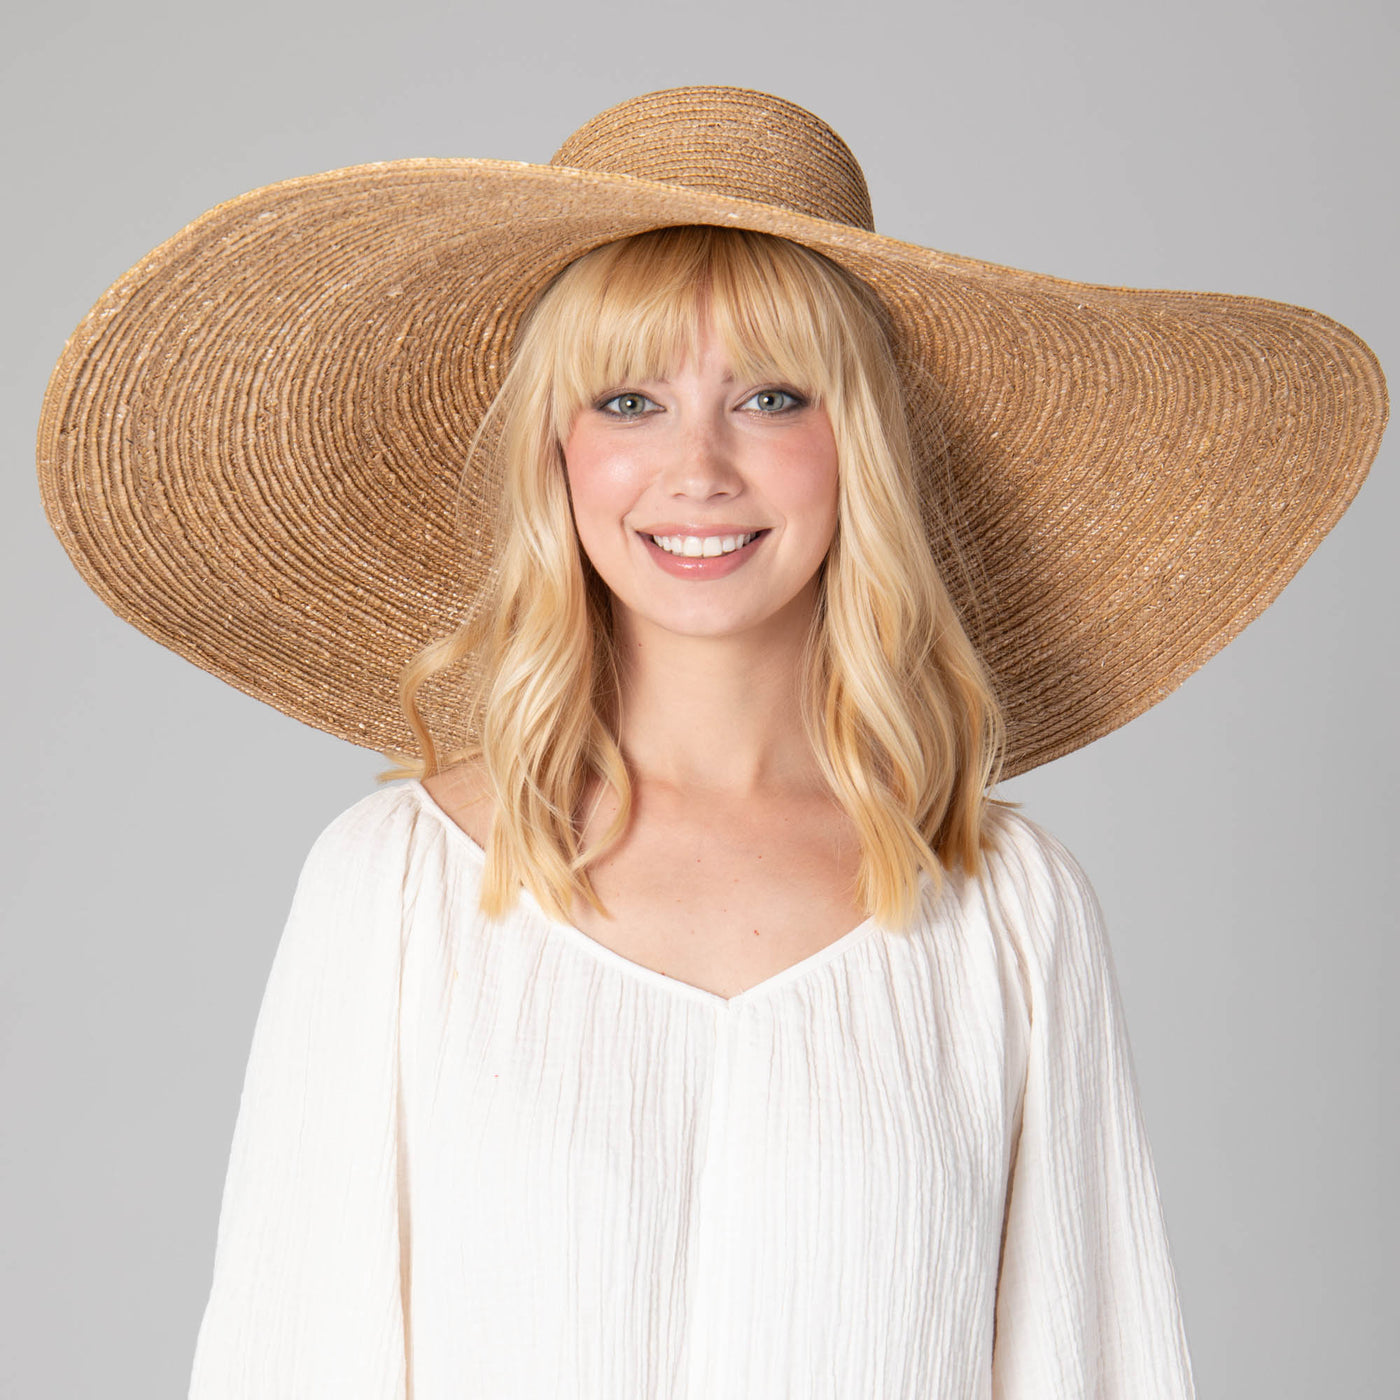 On Holiday - Oversized Wide Brim Sun Hat-SUN BRIM-San Diego Hat Company